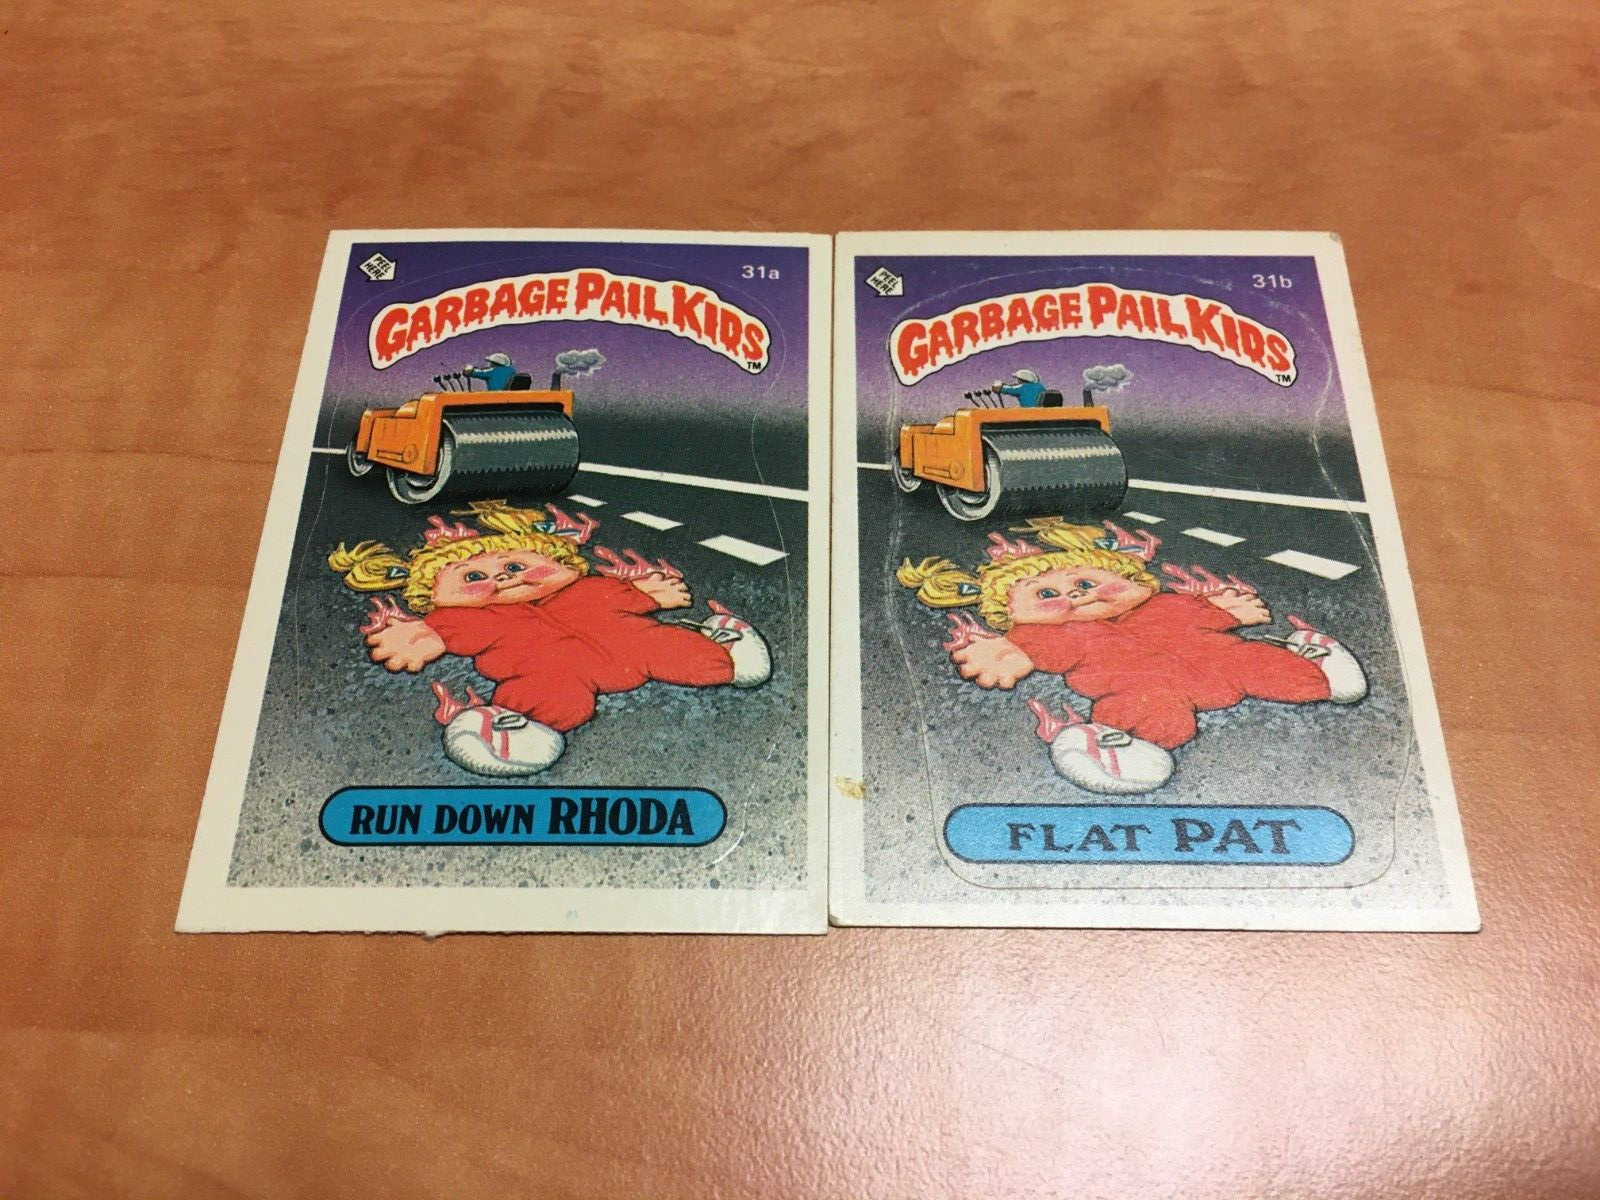 1985 Topps Garbage Pail Kids Series 1 OS1 GPK Run Down Rhoda Flat Pat 31a/b Matt